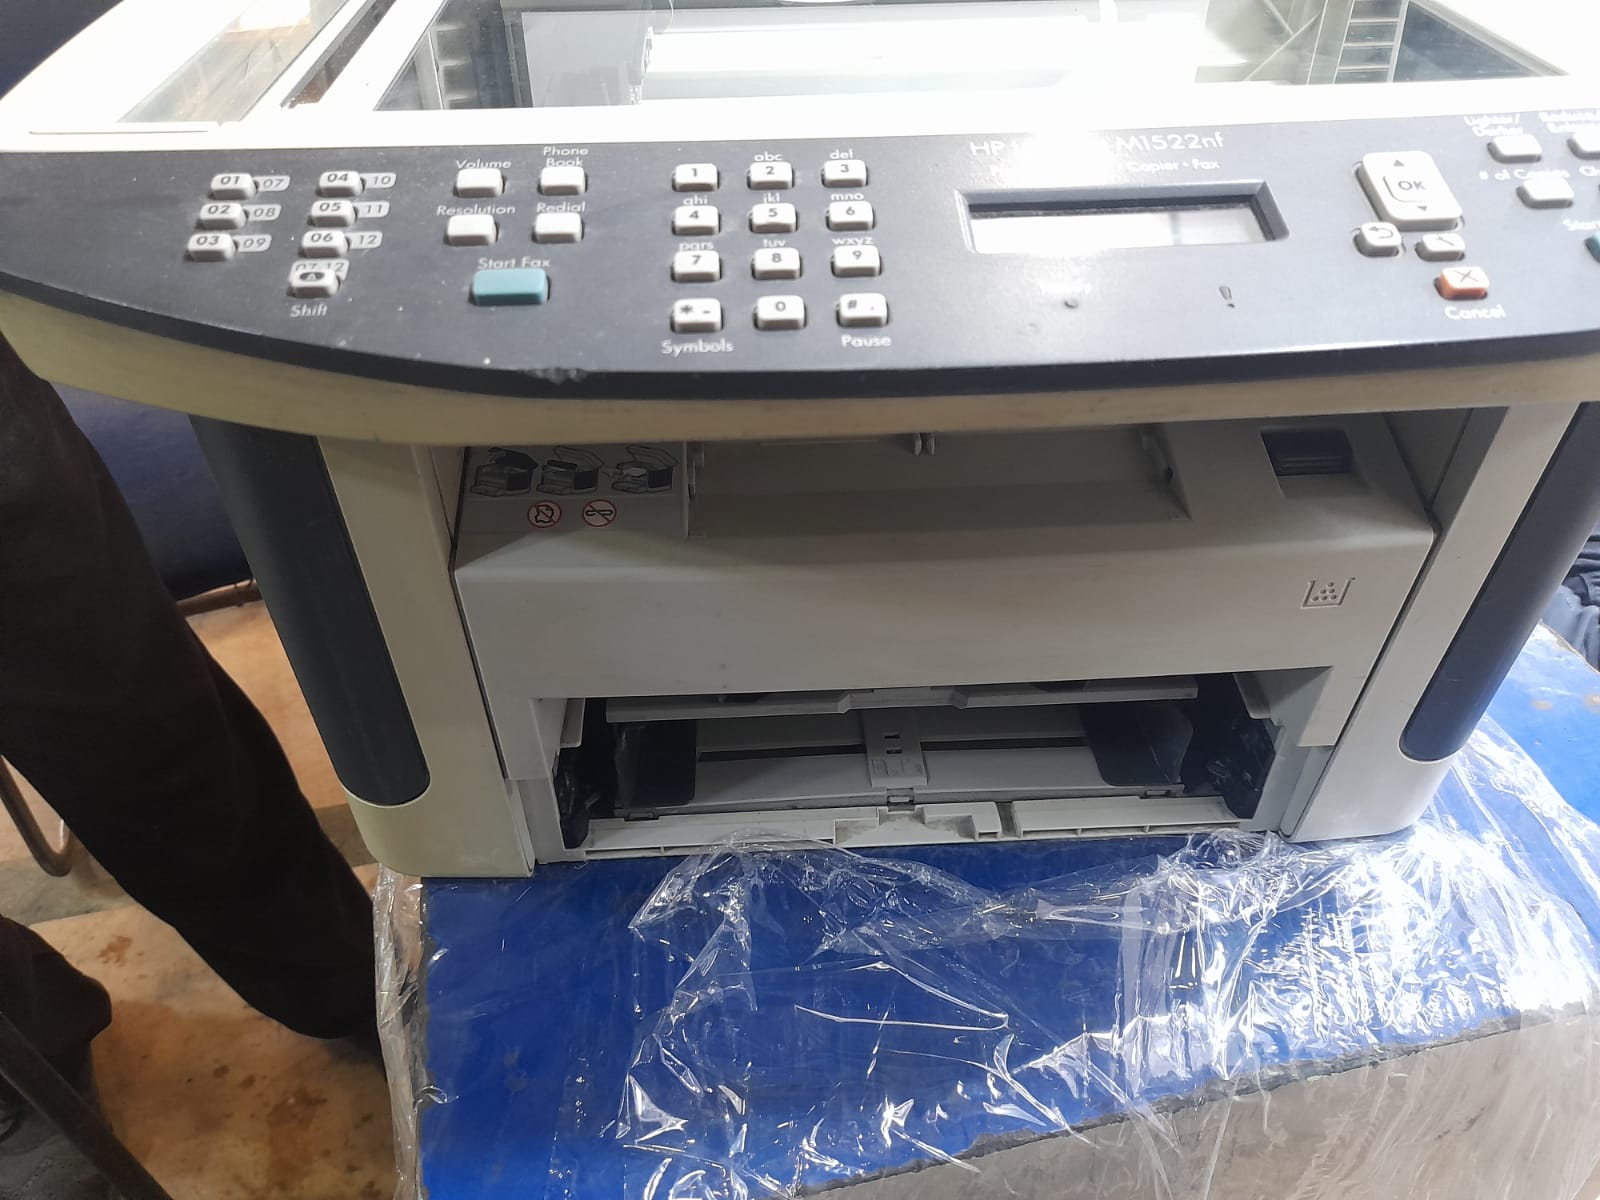 Used/refurbished Hp Laserjet 1522 All in One Printer